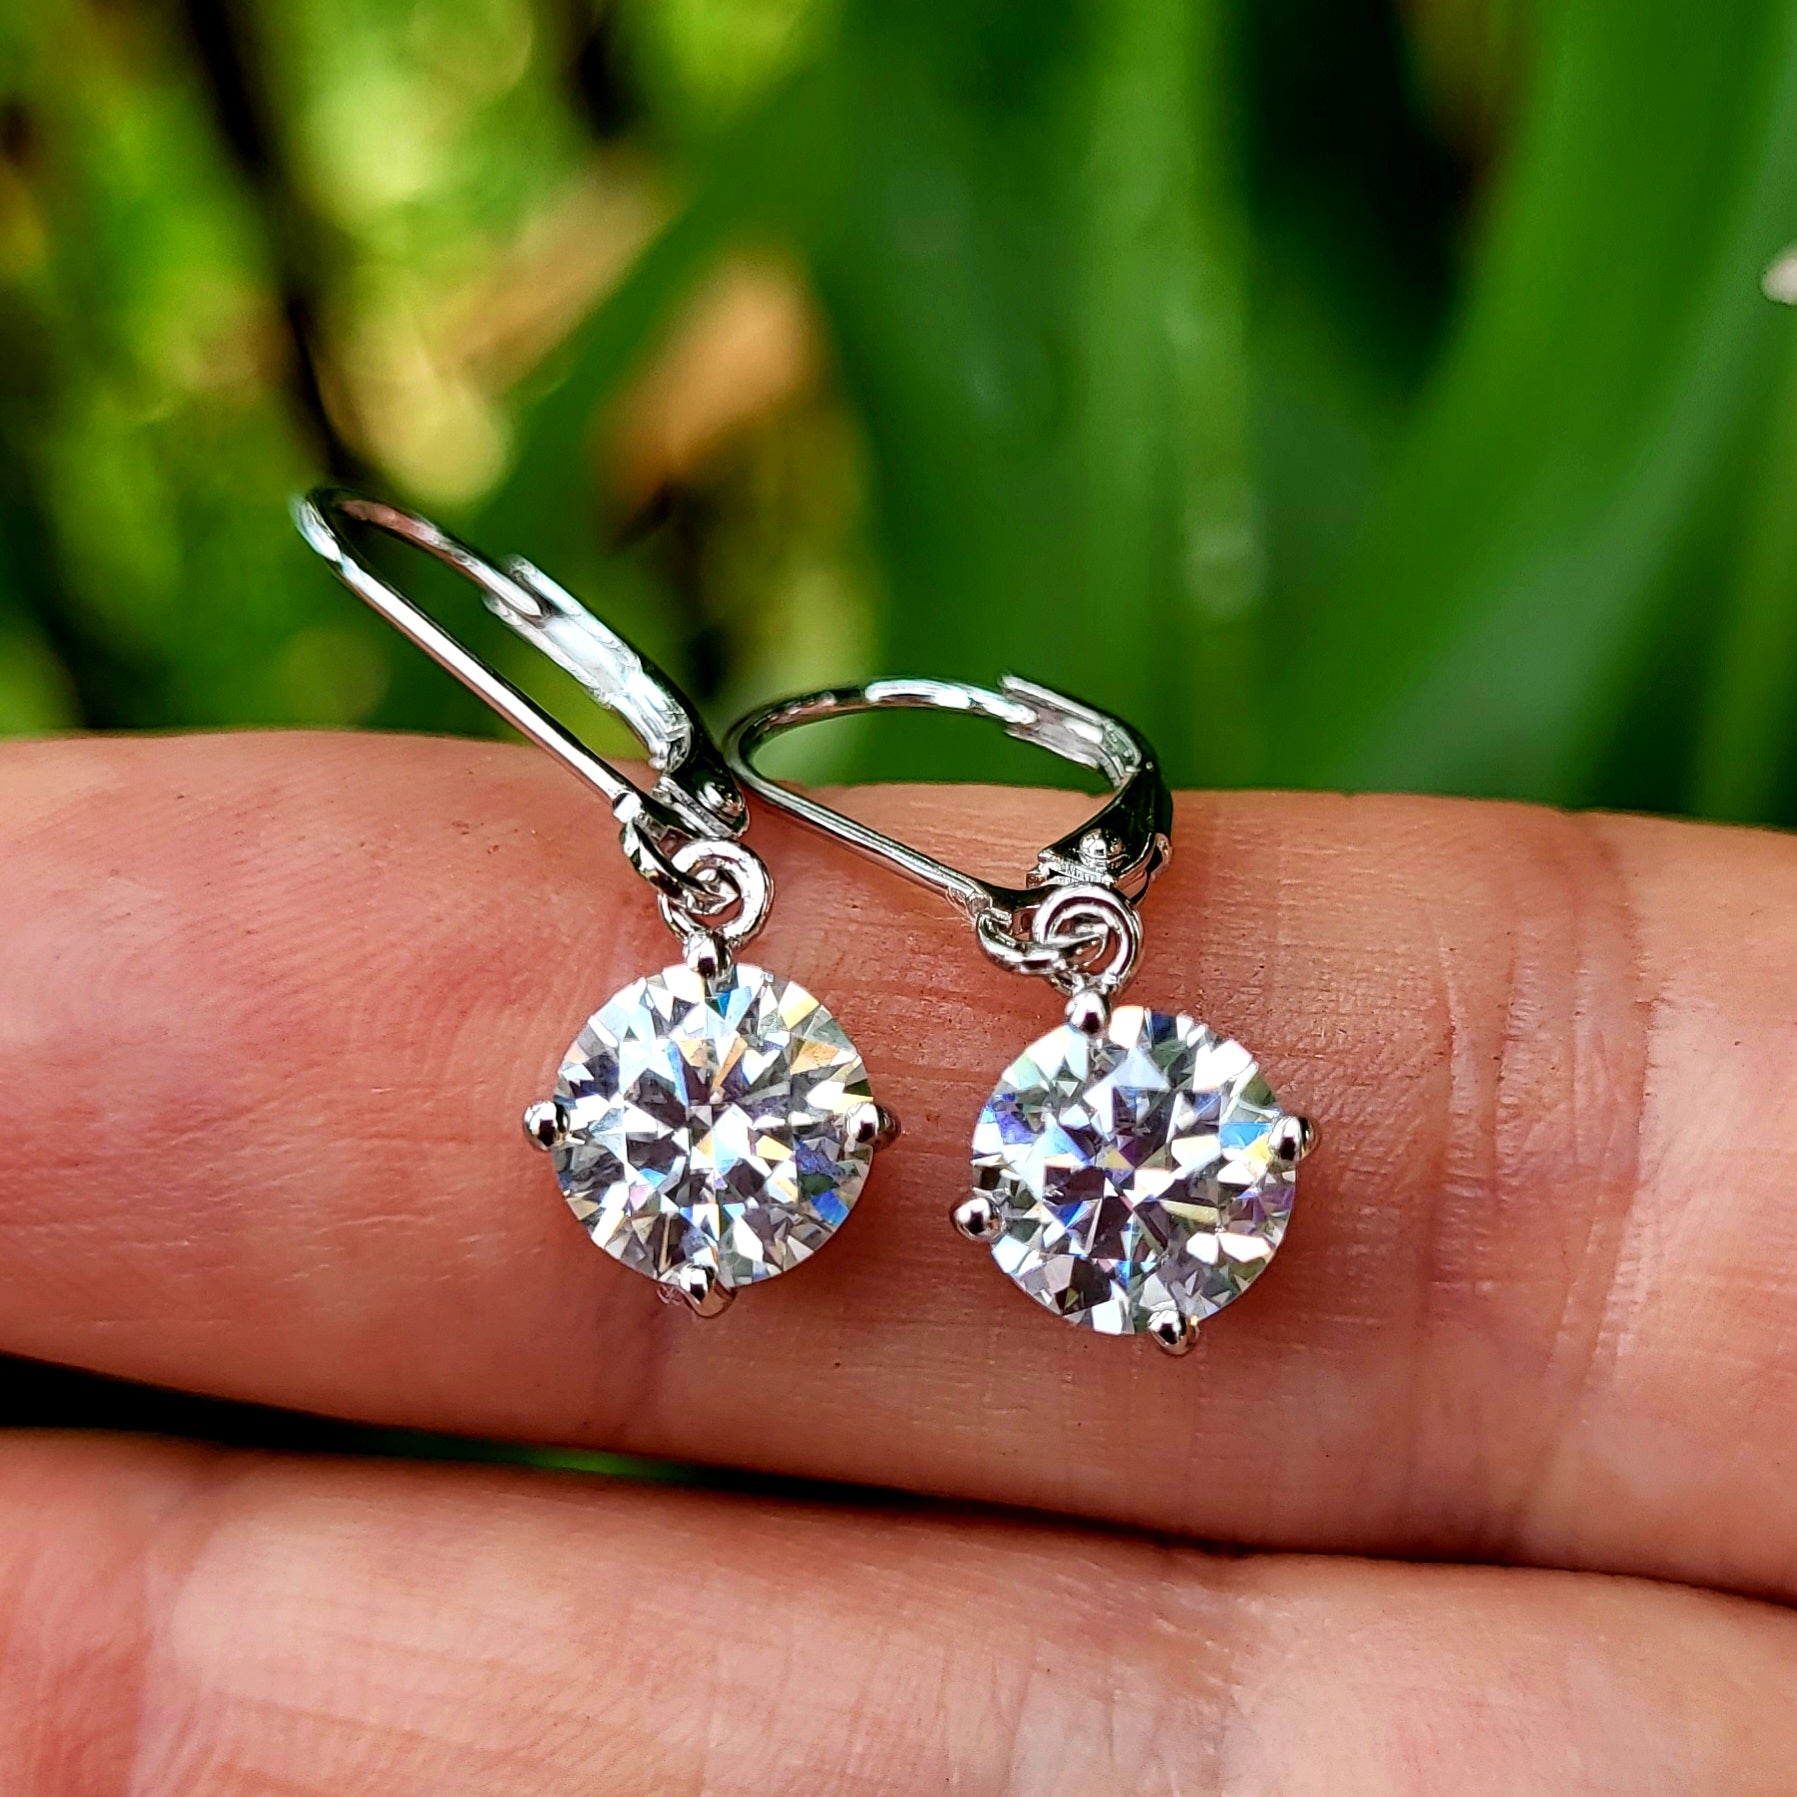 Luxury Moissanite dangle earrings 1.2 carats. Sparkling beautiful